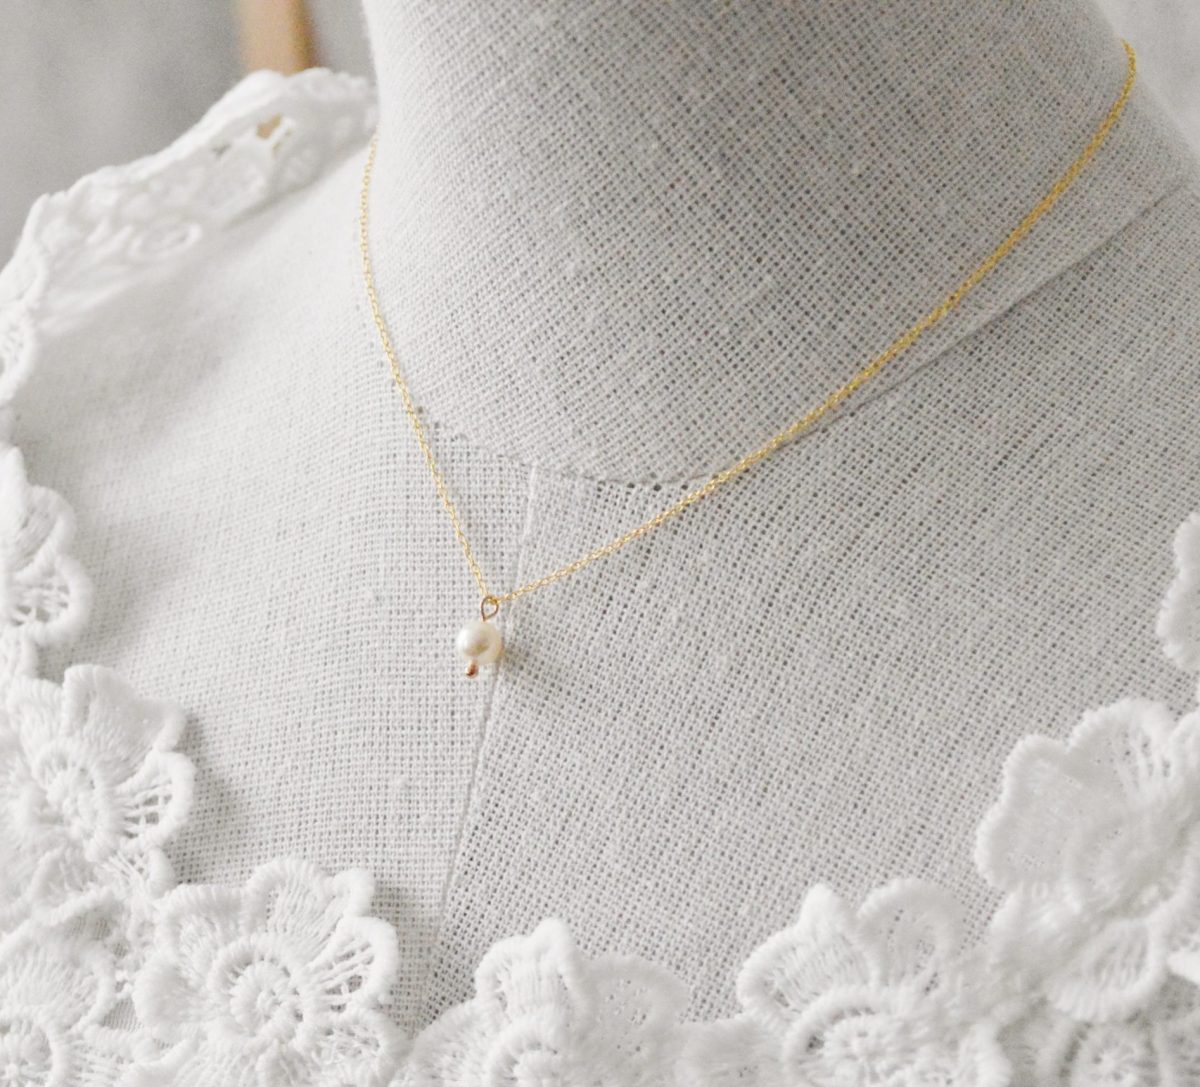 Collier fin à perle nacrée Swarovski - bijou minimaliste et chic Cérémonie